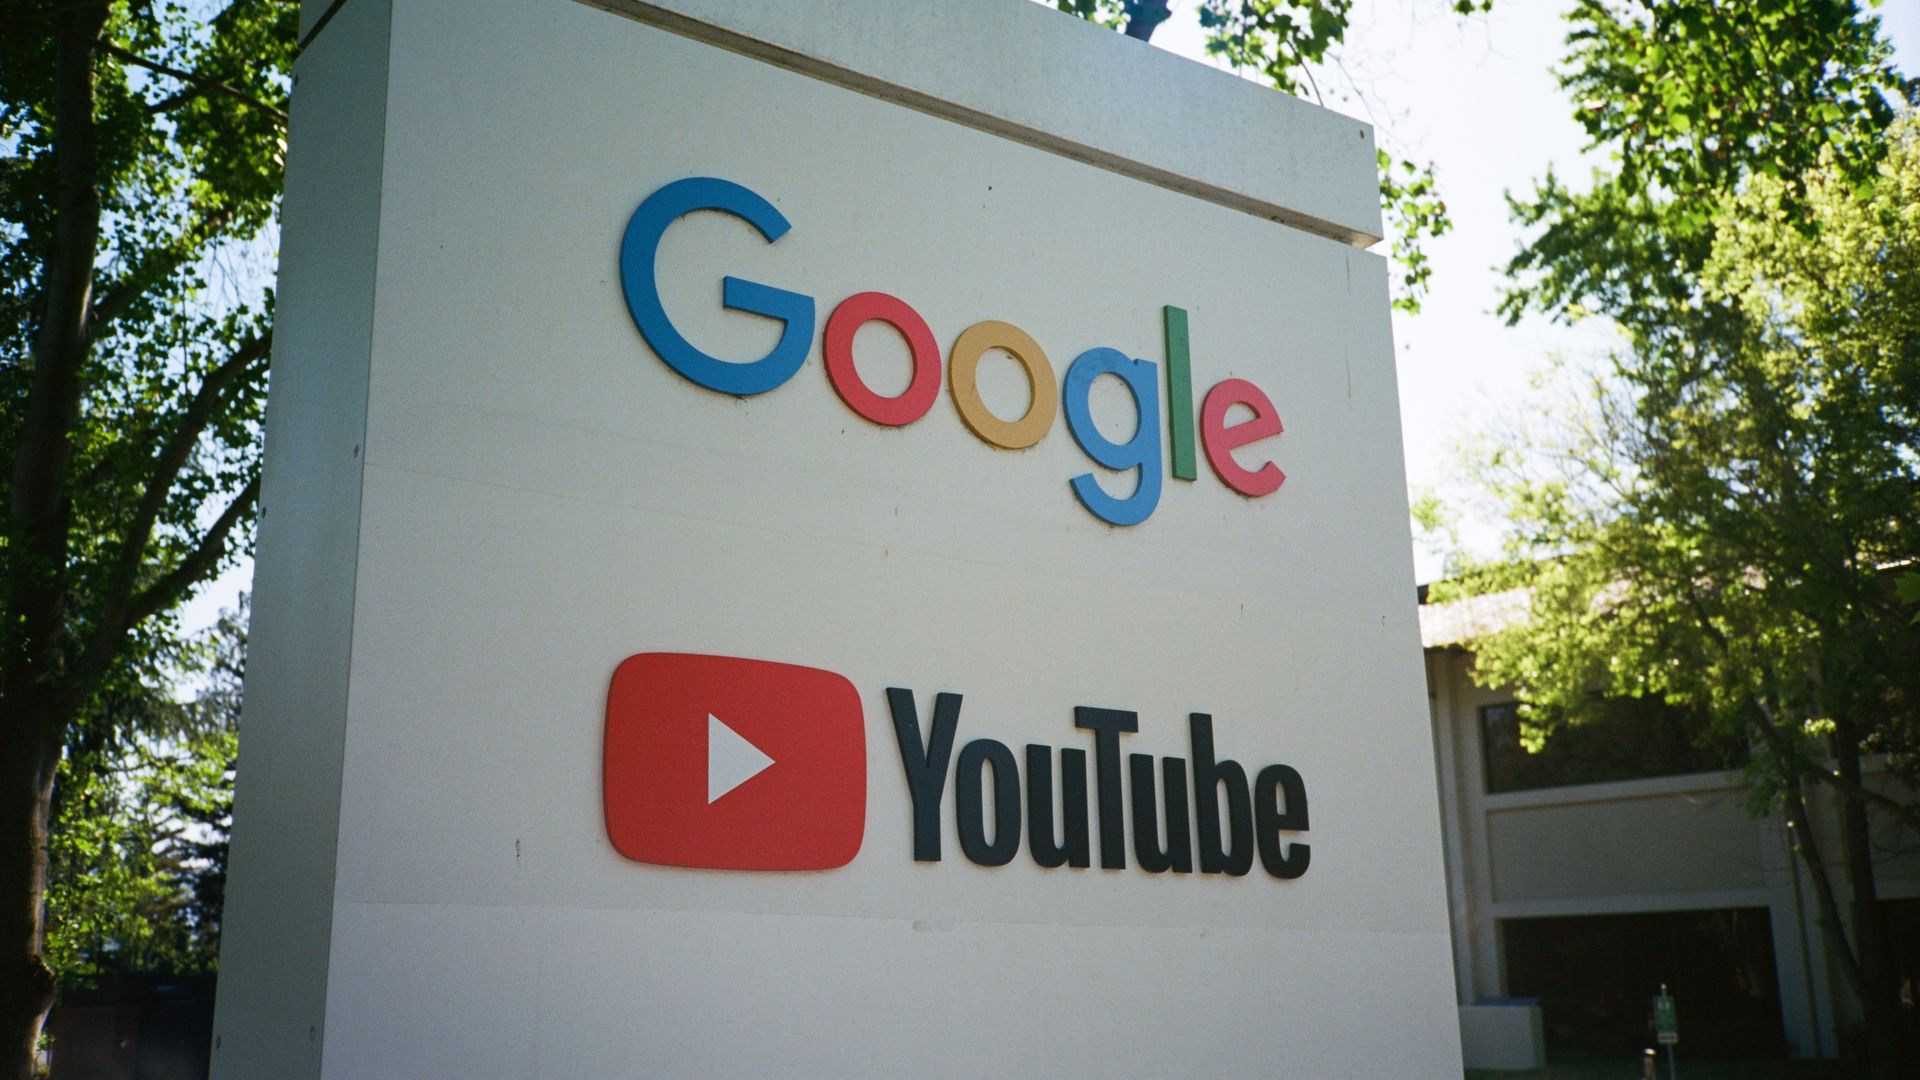 Google Youtube sign